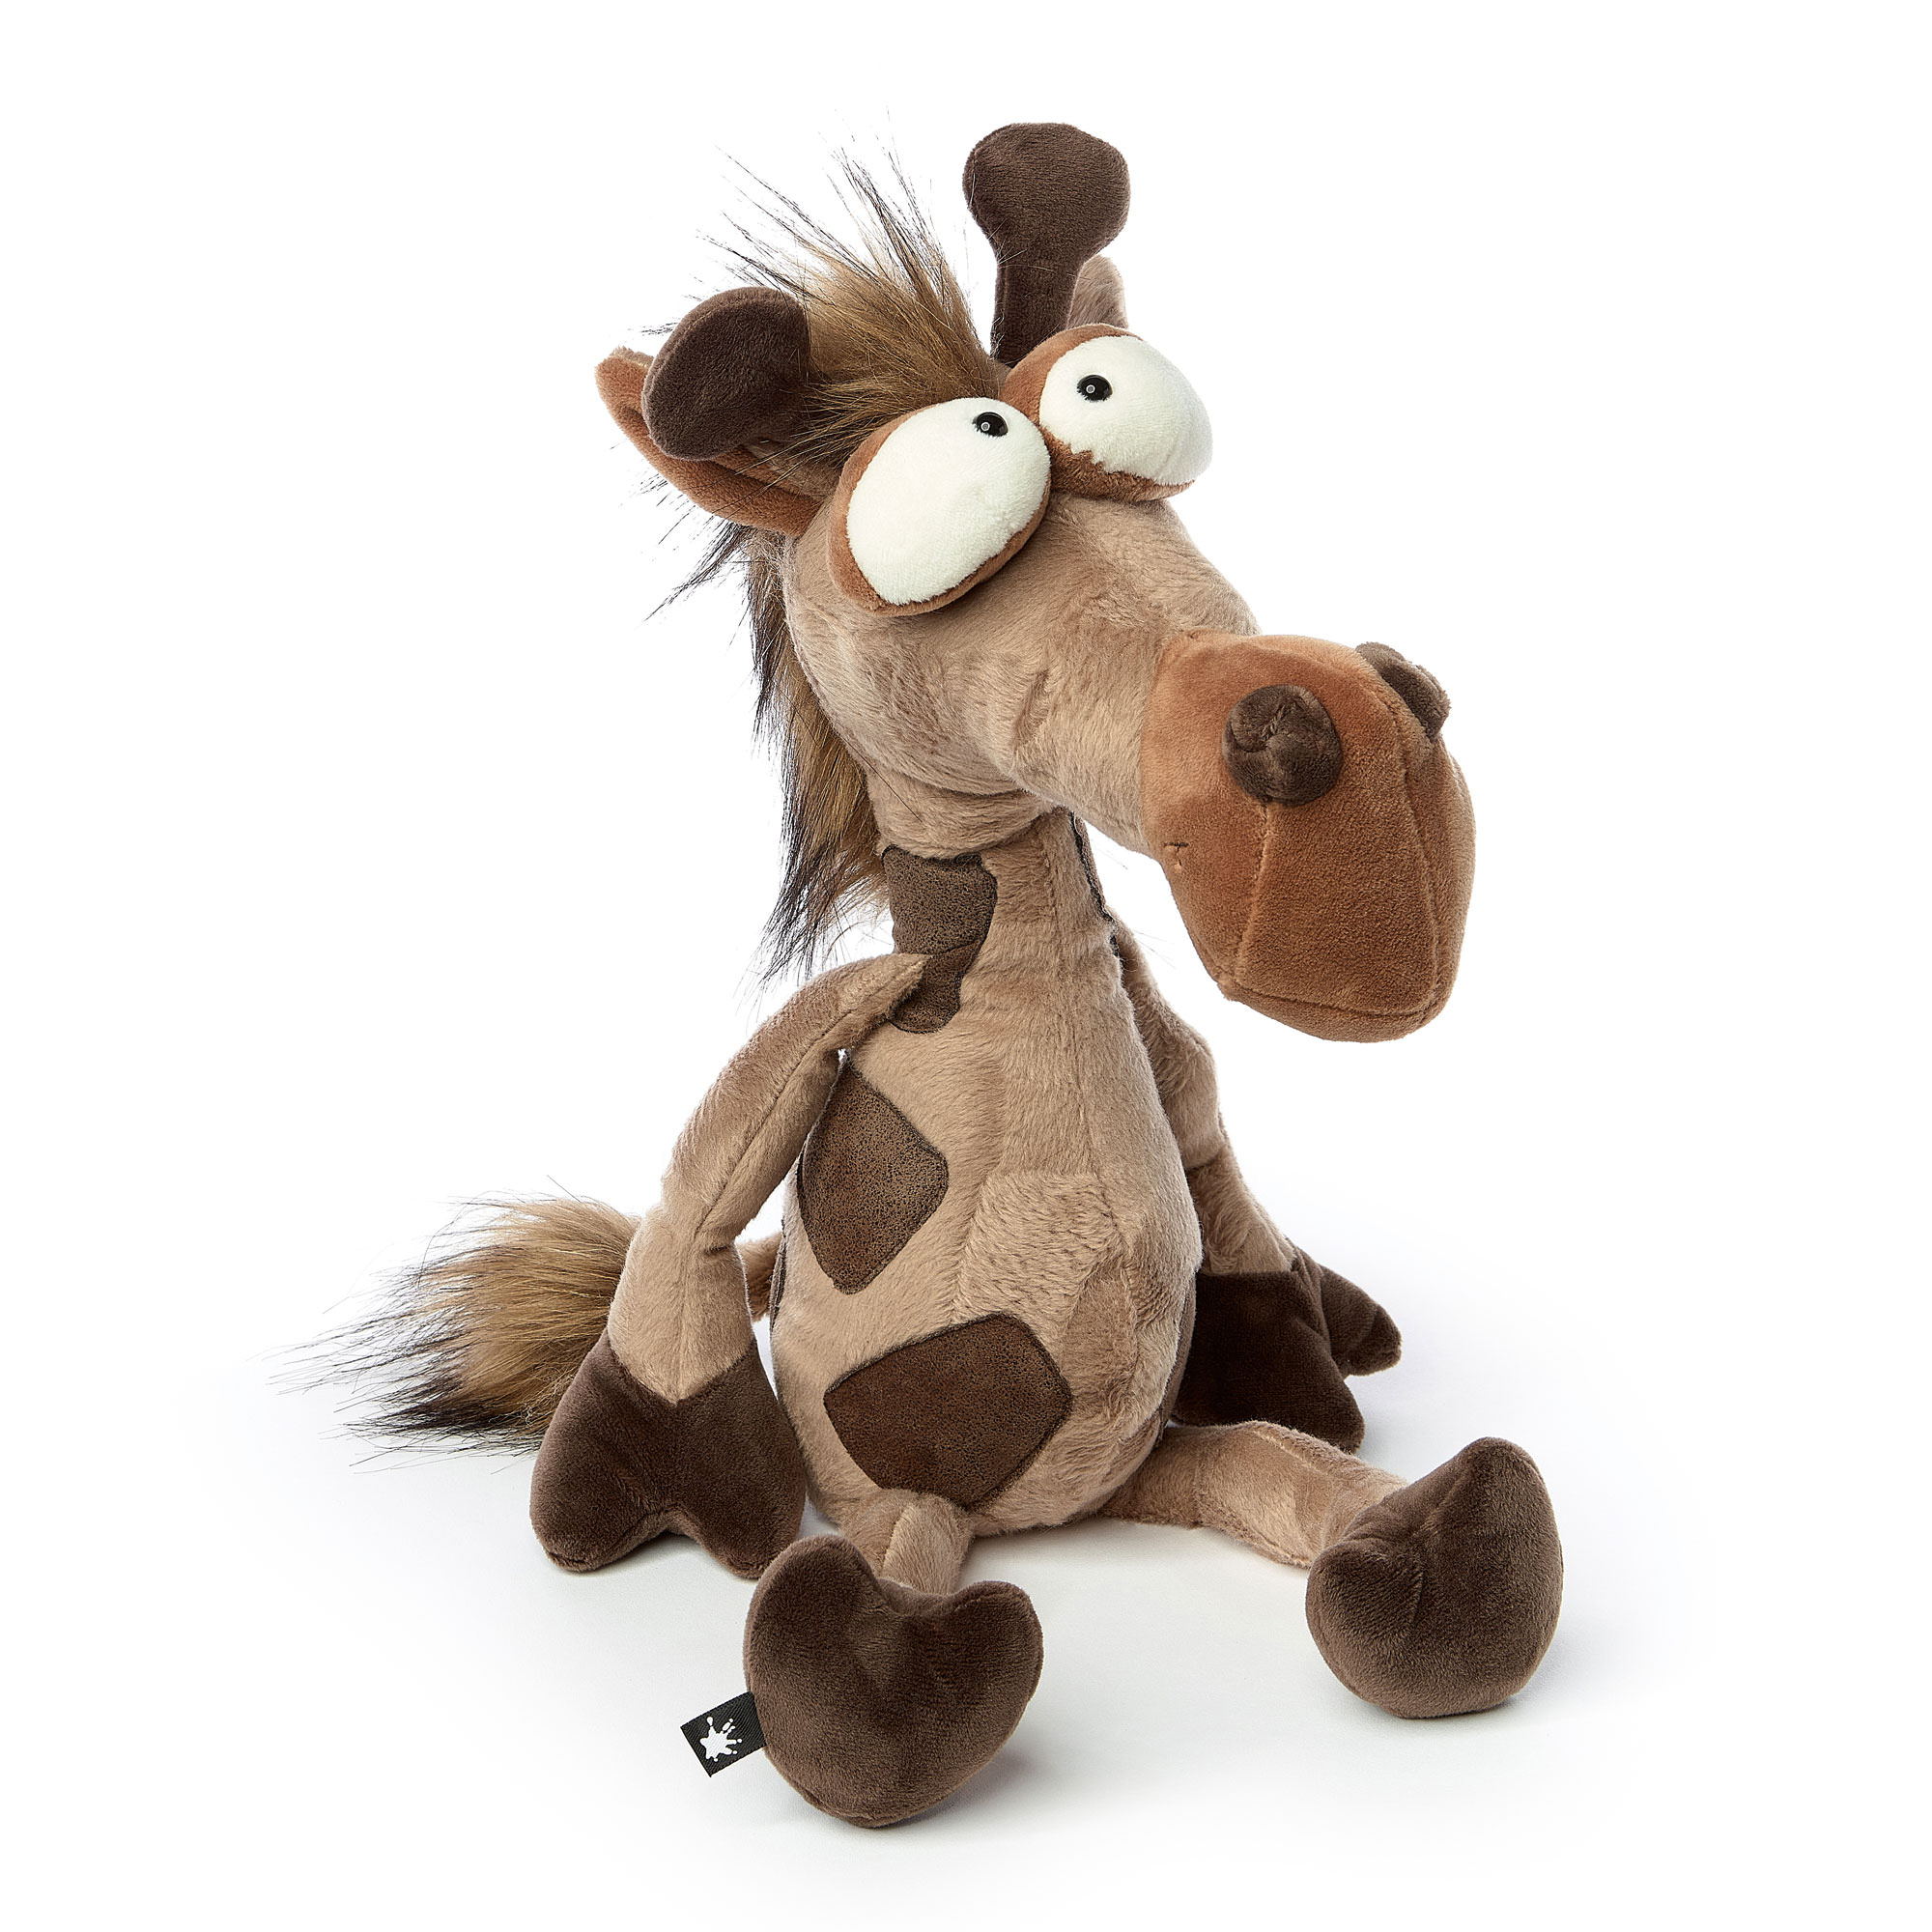 Plush toy Gigolo Giraffe, Beasts collection